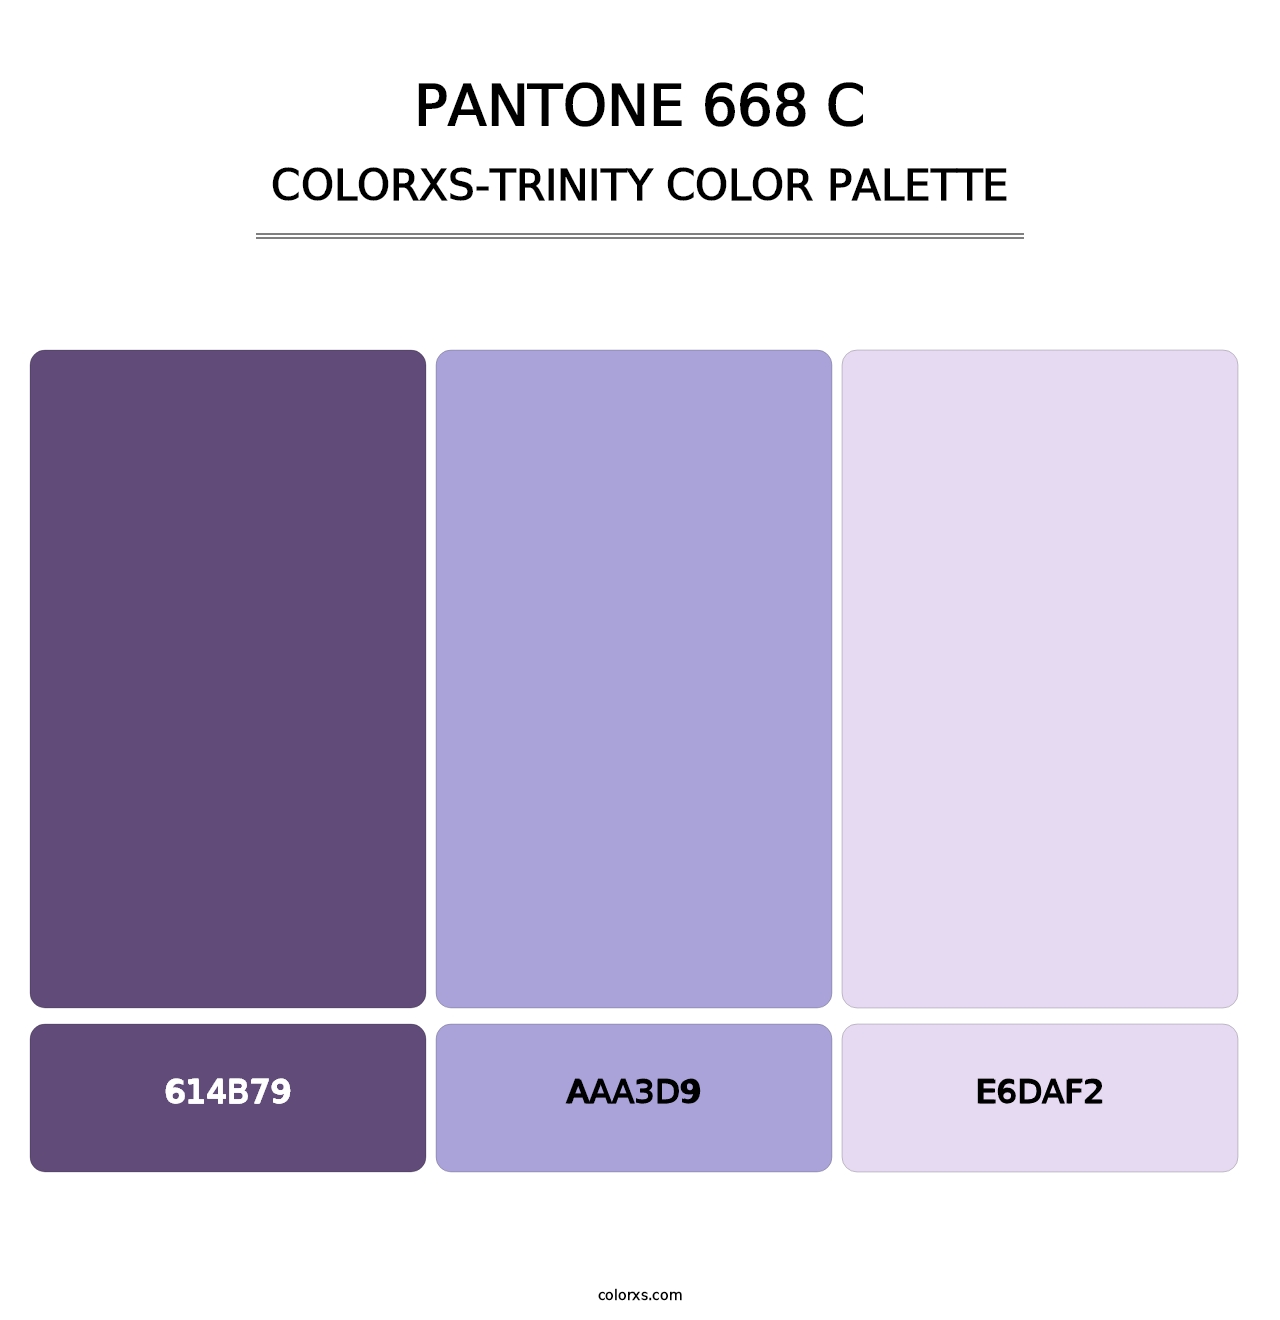 PANTONE 668 C - Colorxs Trinity Palette